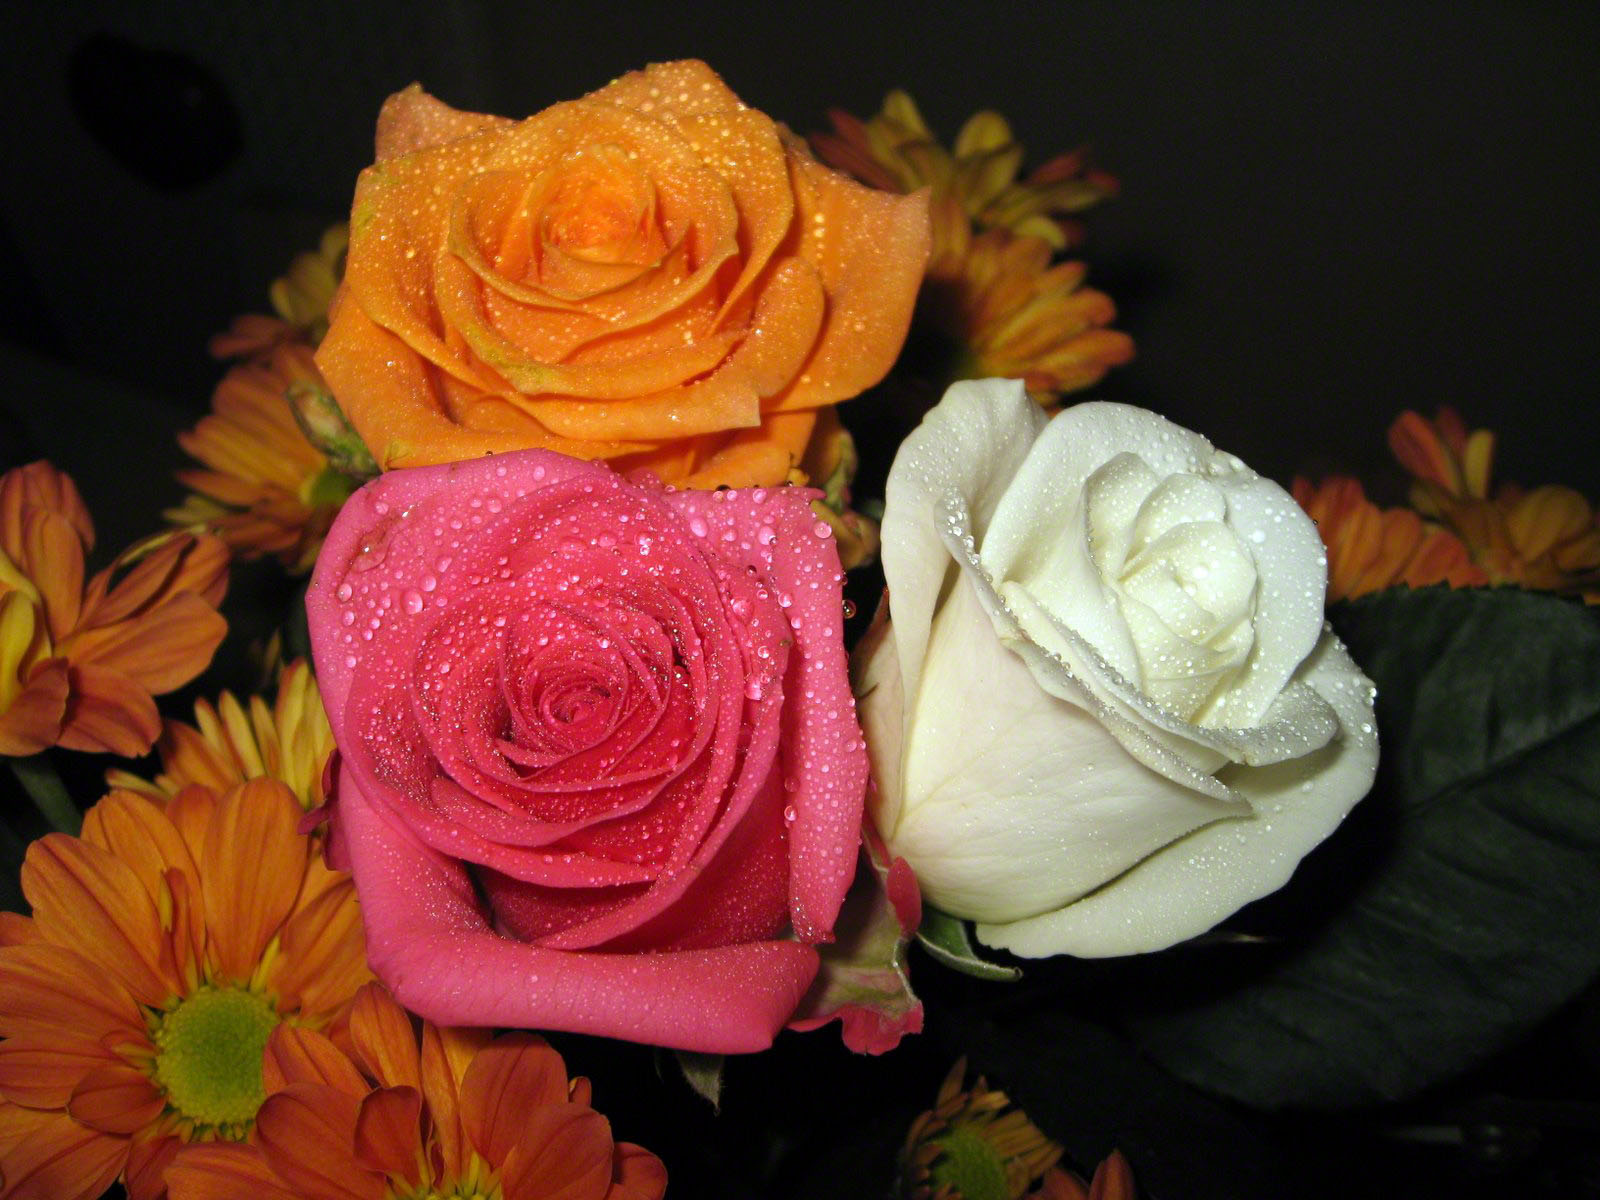 http://www.fabiovisentin.com/photography/photo/12/roses-wallpaper-roses-bouquets4485.JPG